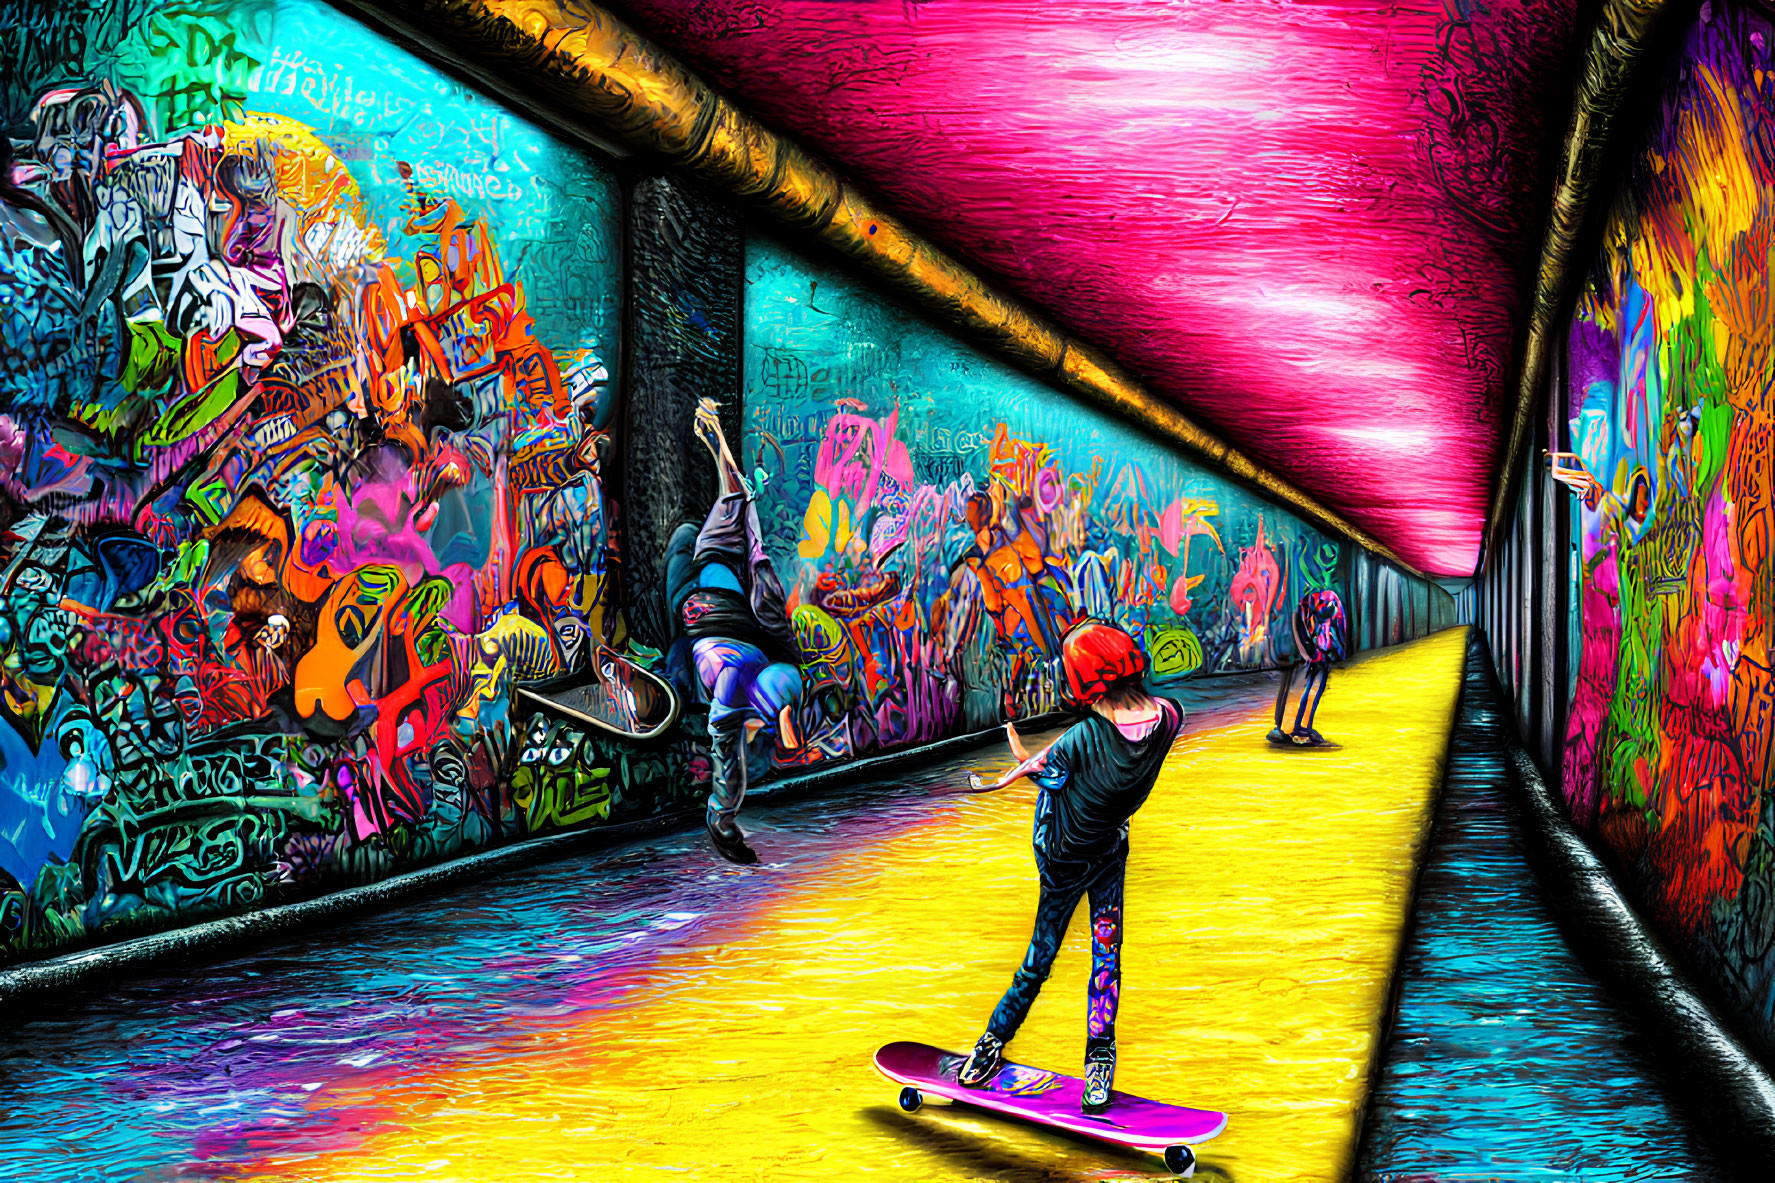 Skateboarder in Graffiti Tunnel with Fluorescent Lighting